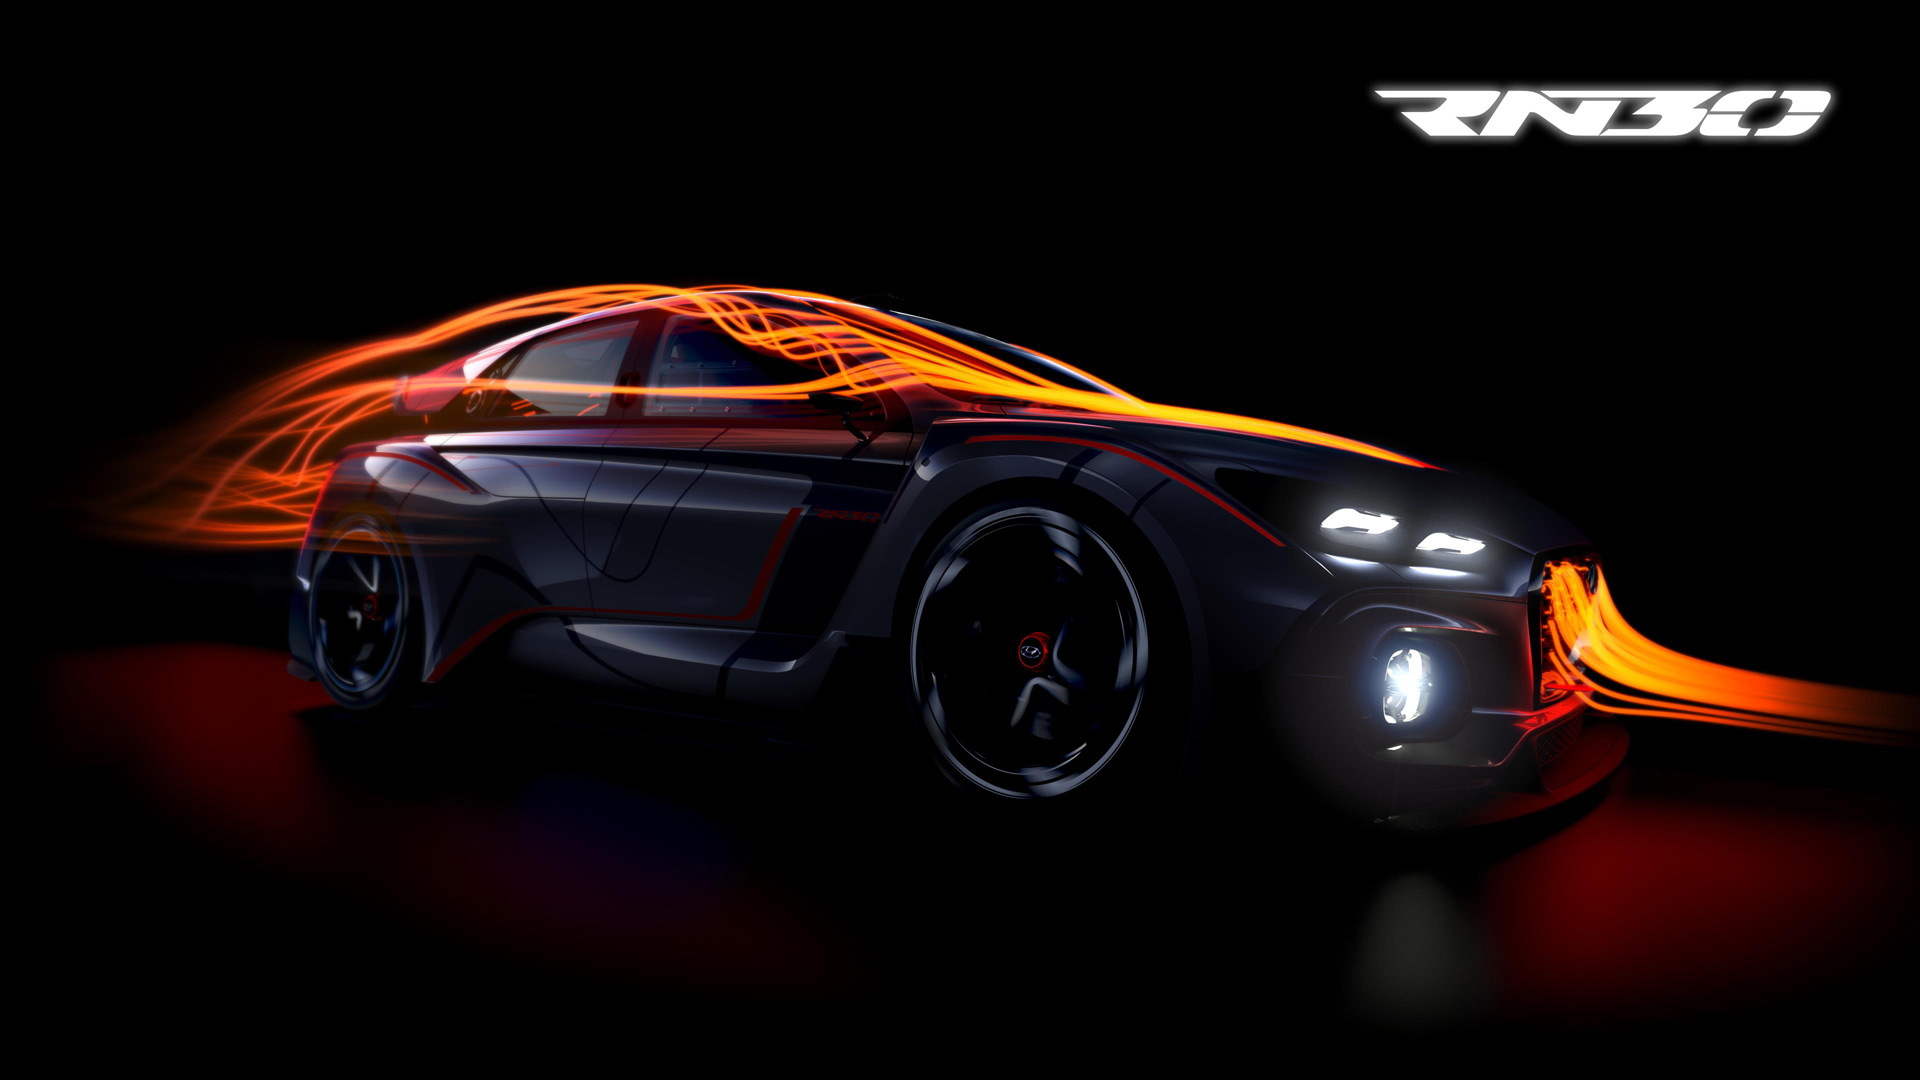 Teaser for Hyundai RN30 concept debuting at 2016 Paris auto show